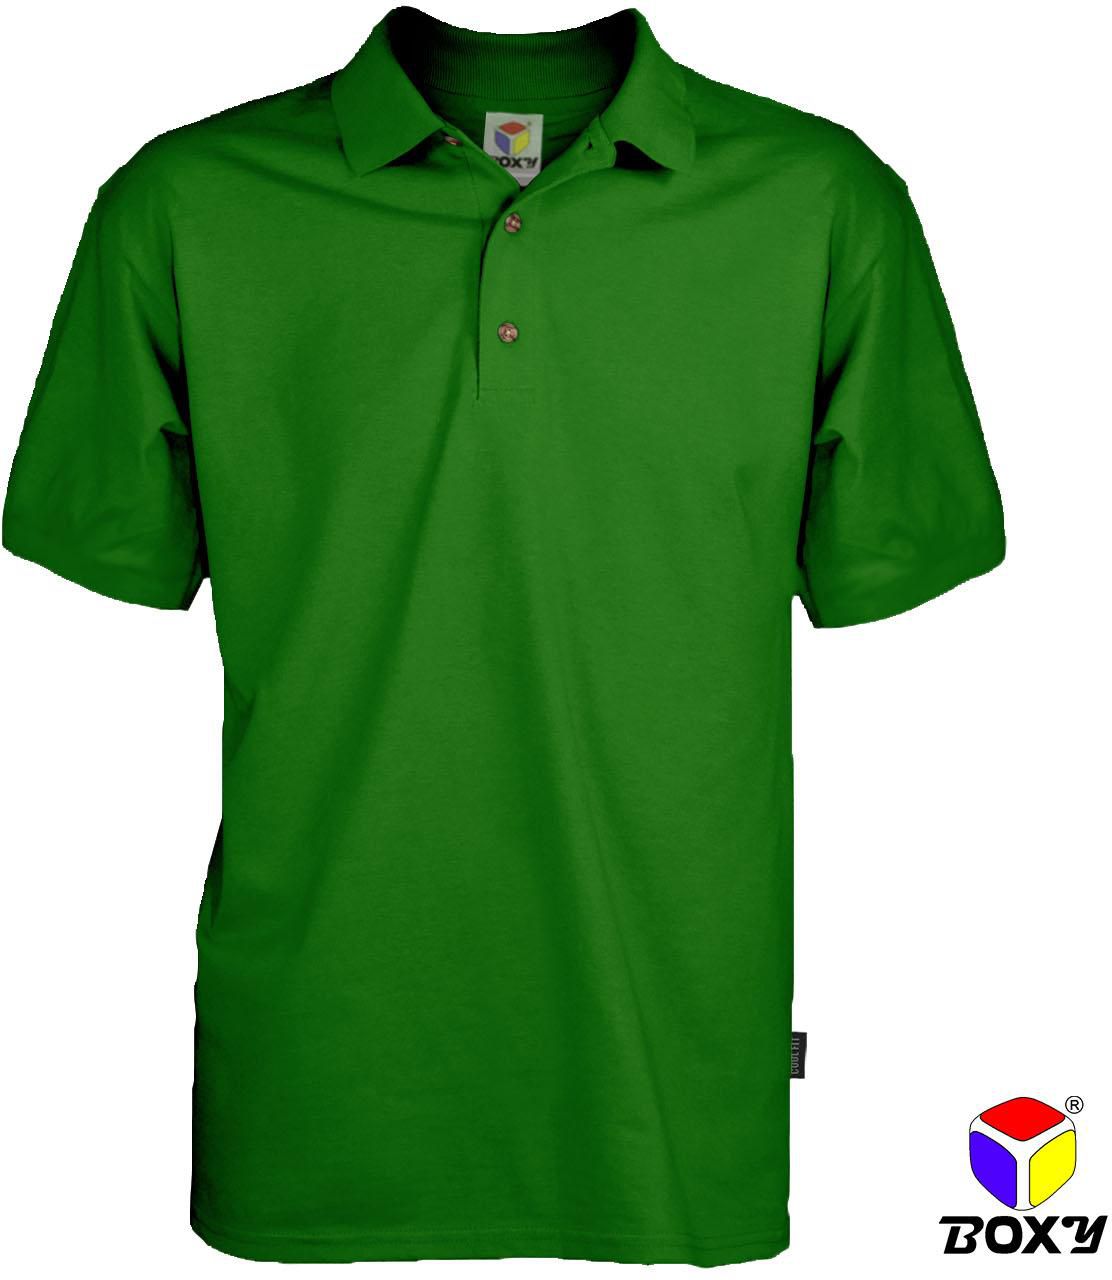 Boxy Microfiber Classic Short Sleeve Polo Shirts - 7 Sizes (Irish Green)